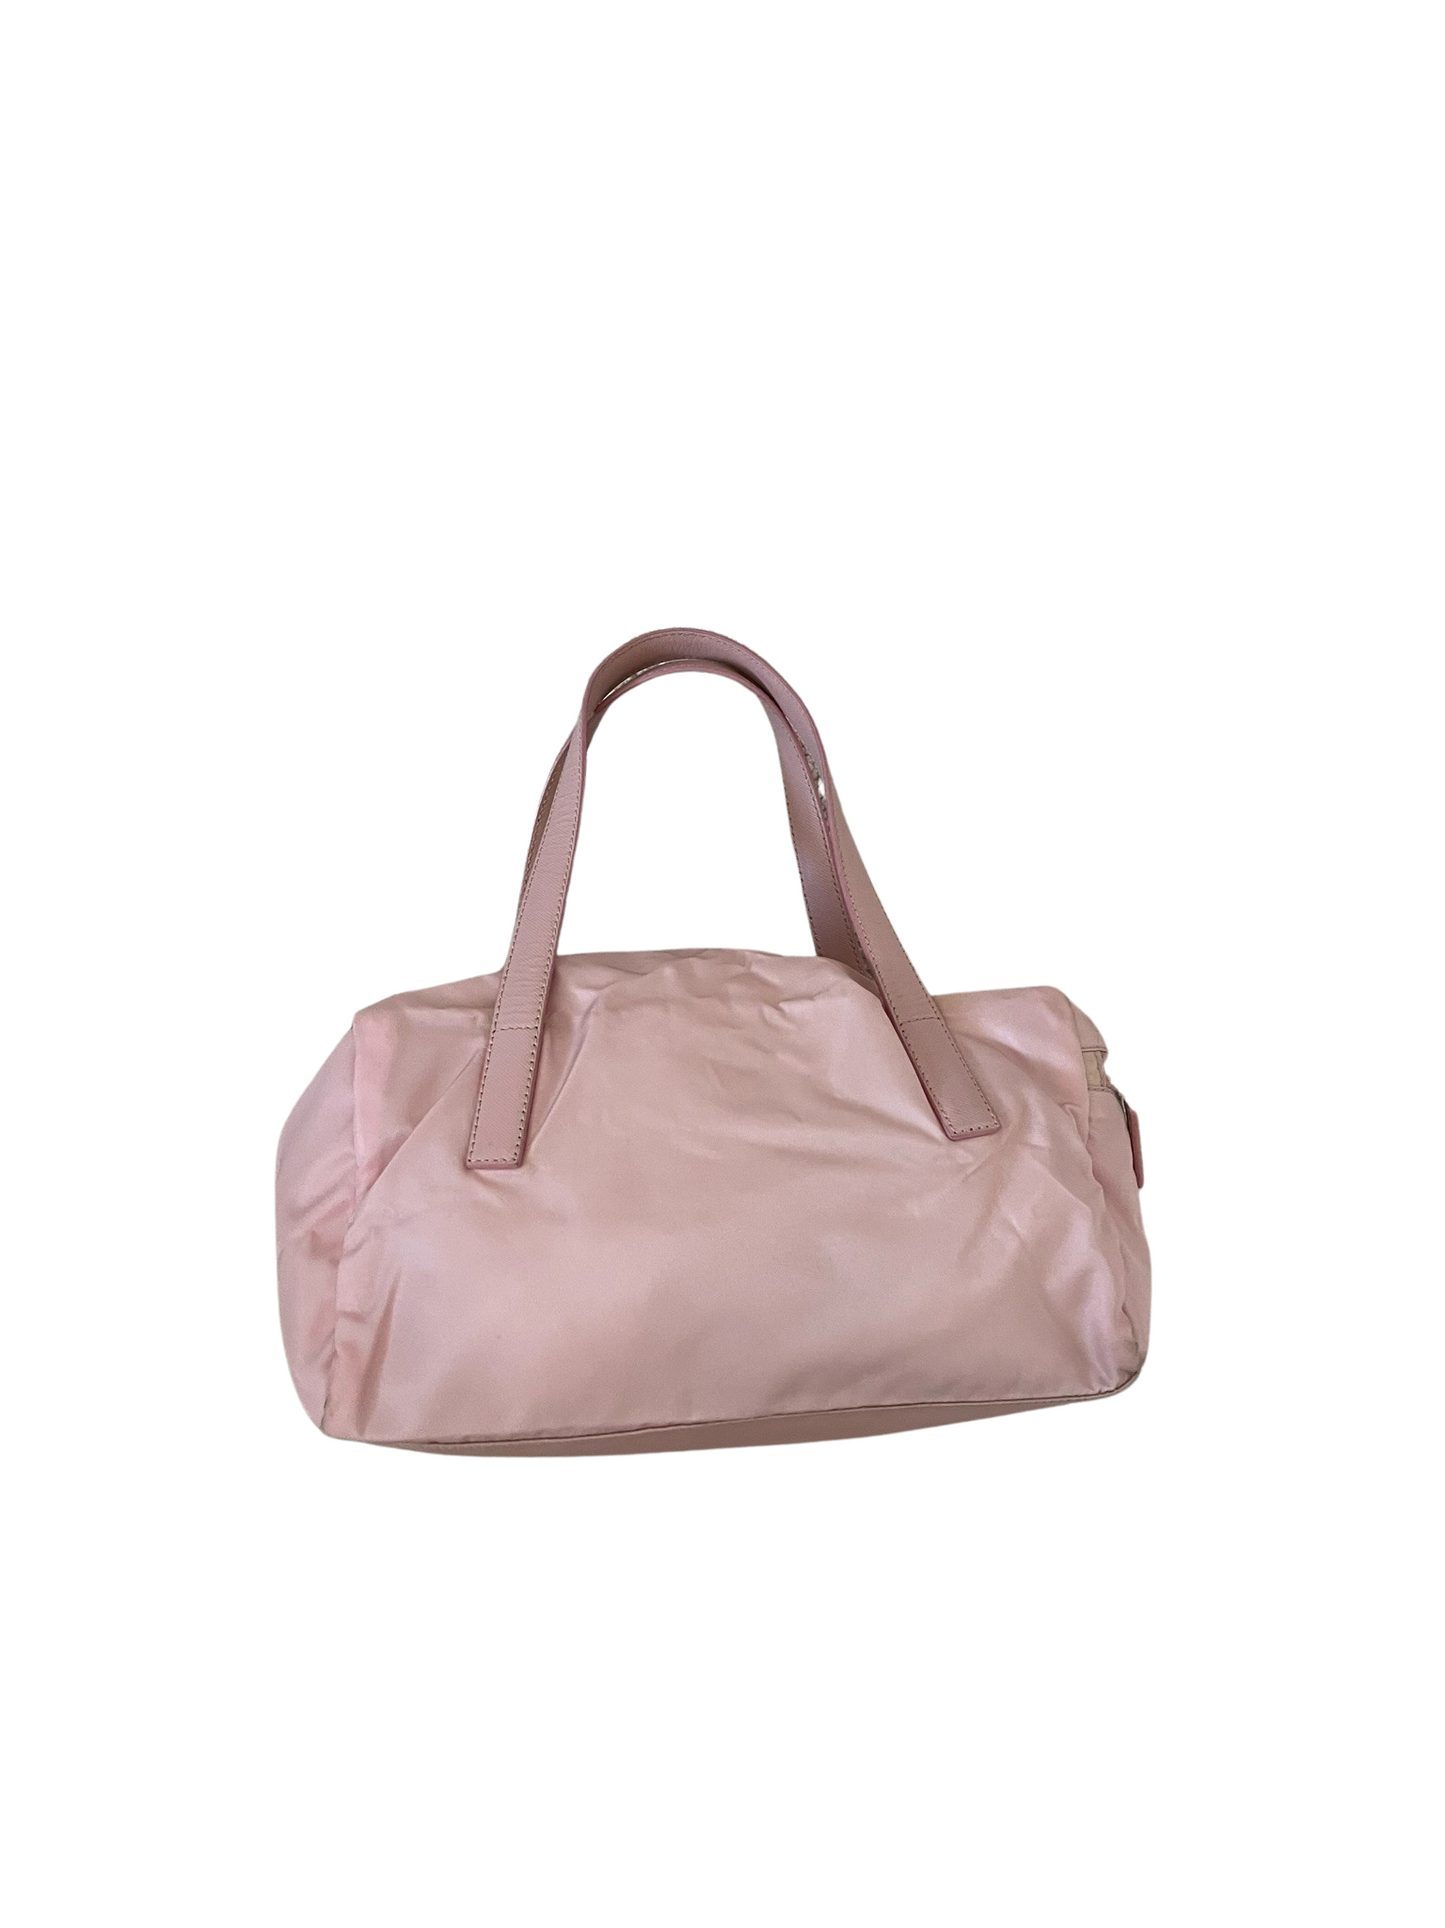 Prada Baby Pink Nylon & Leather Handbag